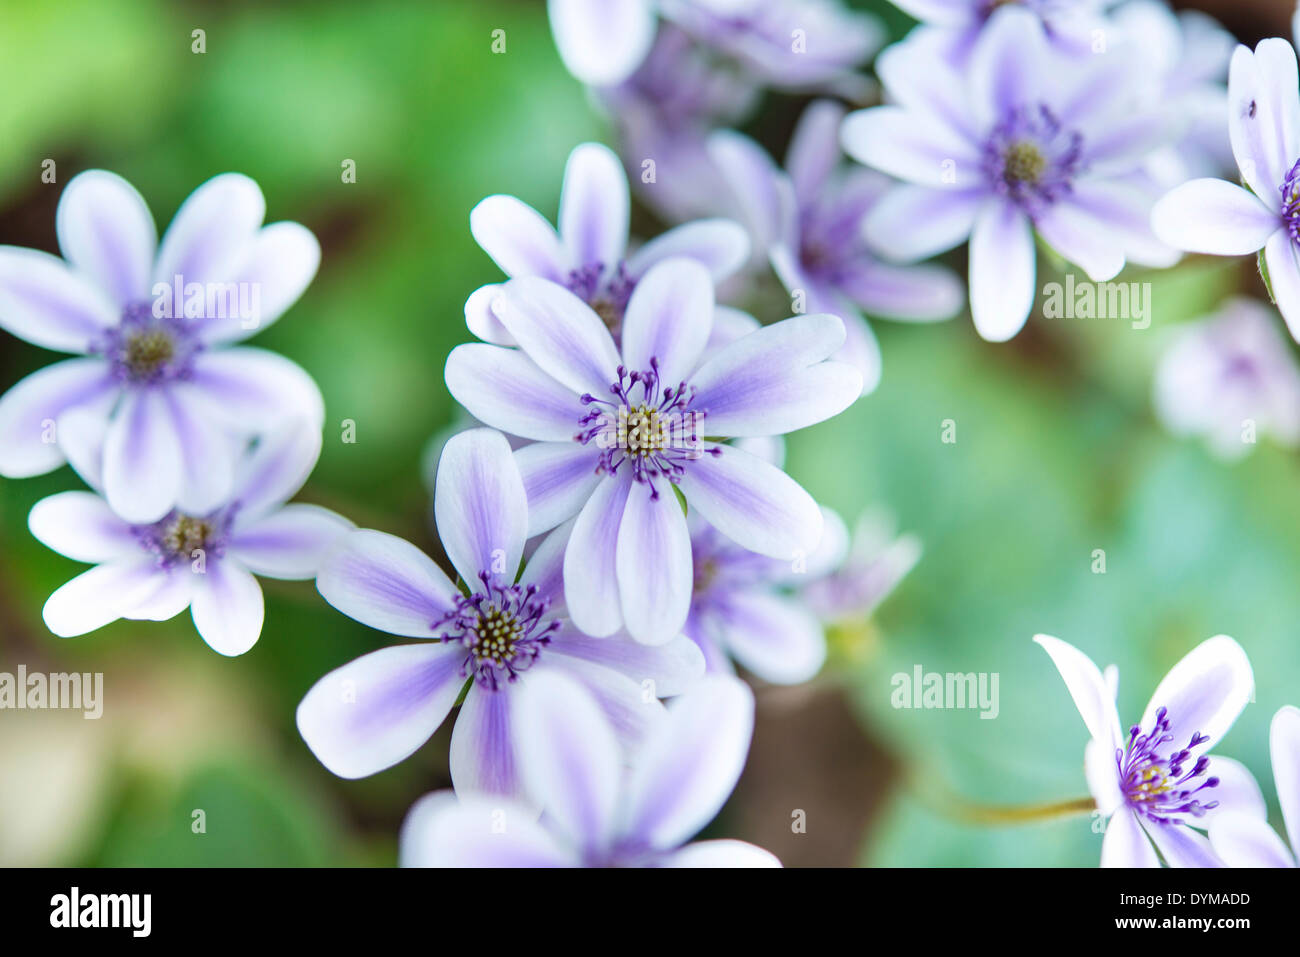 White-purple Hepatica or Liverwort (Hepatica), cultivar, close-up Stock Photo